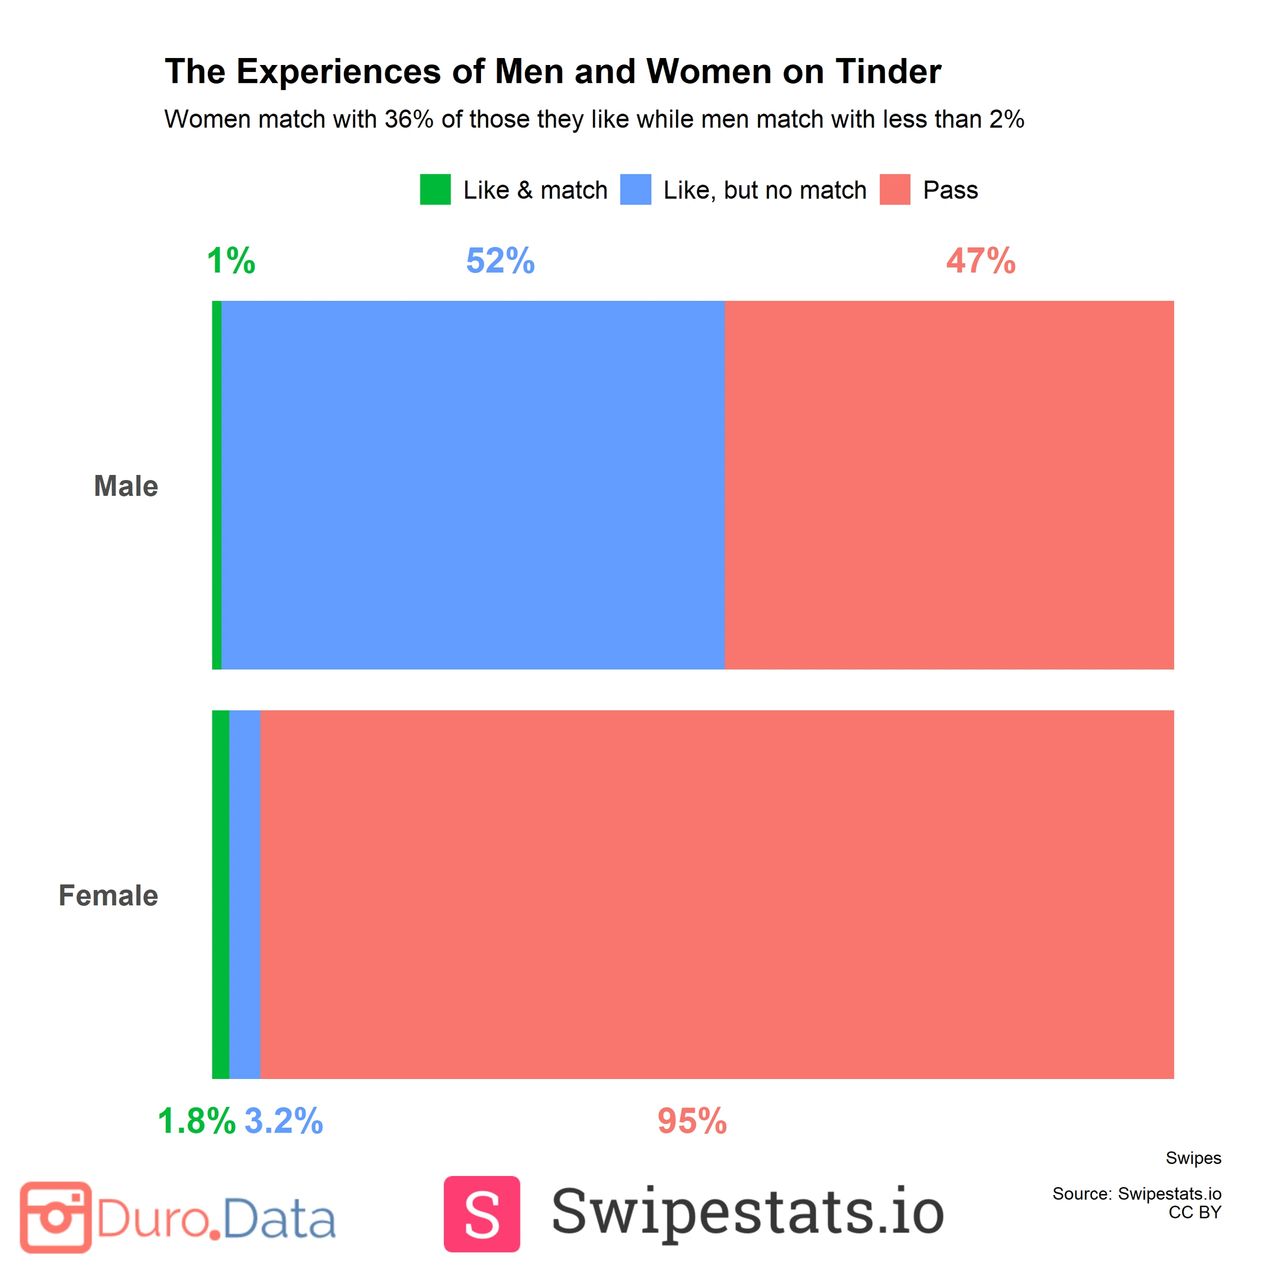 Male vs female experience on SStinder